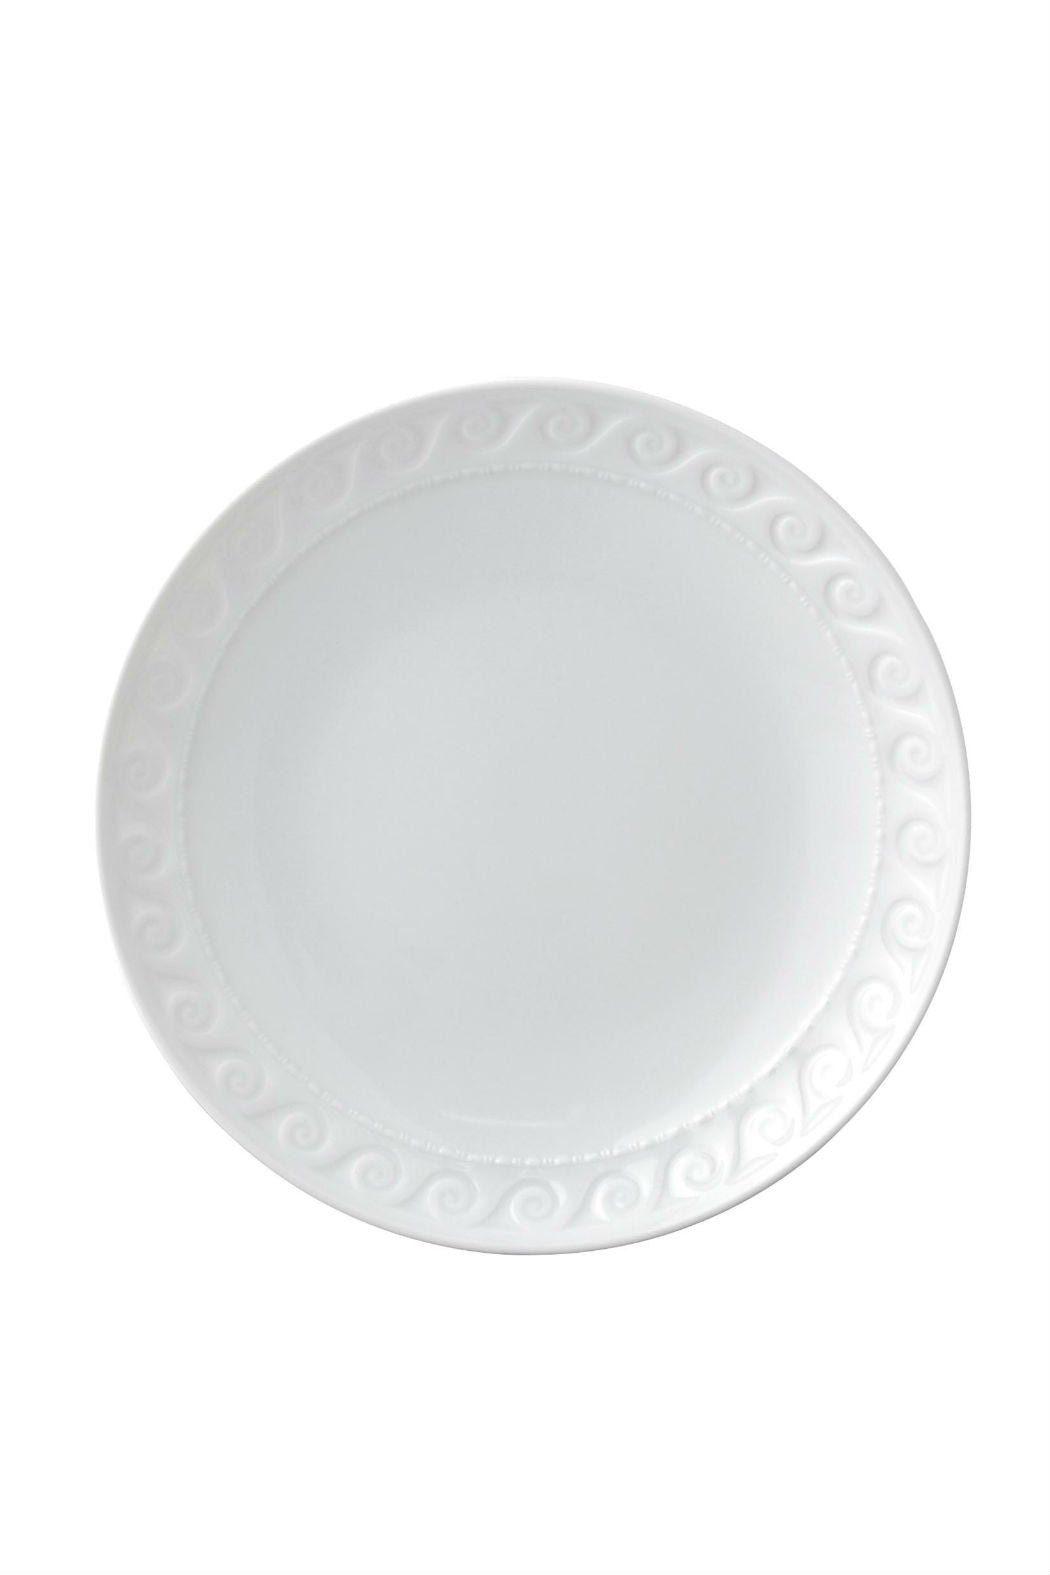 Bernardaud Louvre Individual Pasta Bowl White Everyday Dishes- New Orientation